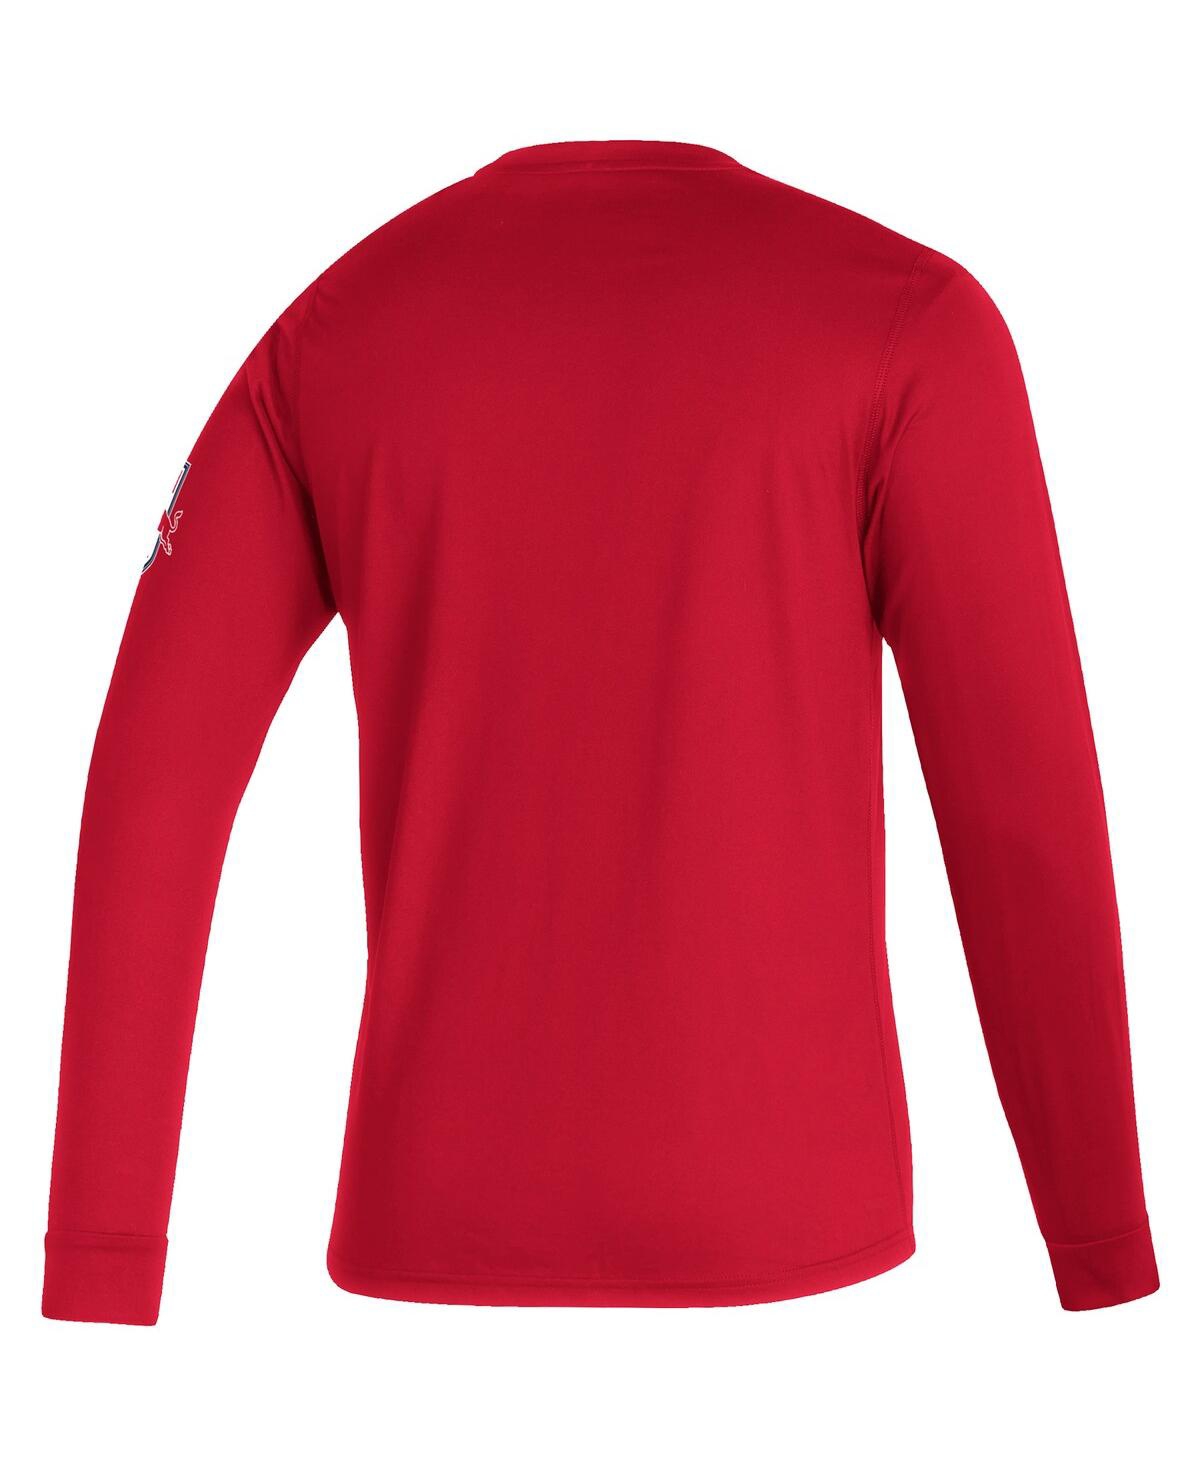 Shop Adidas Originals Men's Adidas Red New York Red Bulls Vintage-like Aeroready Long Sleeve T-shirt